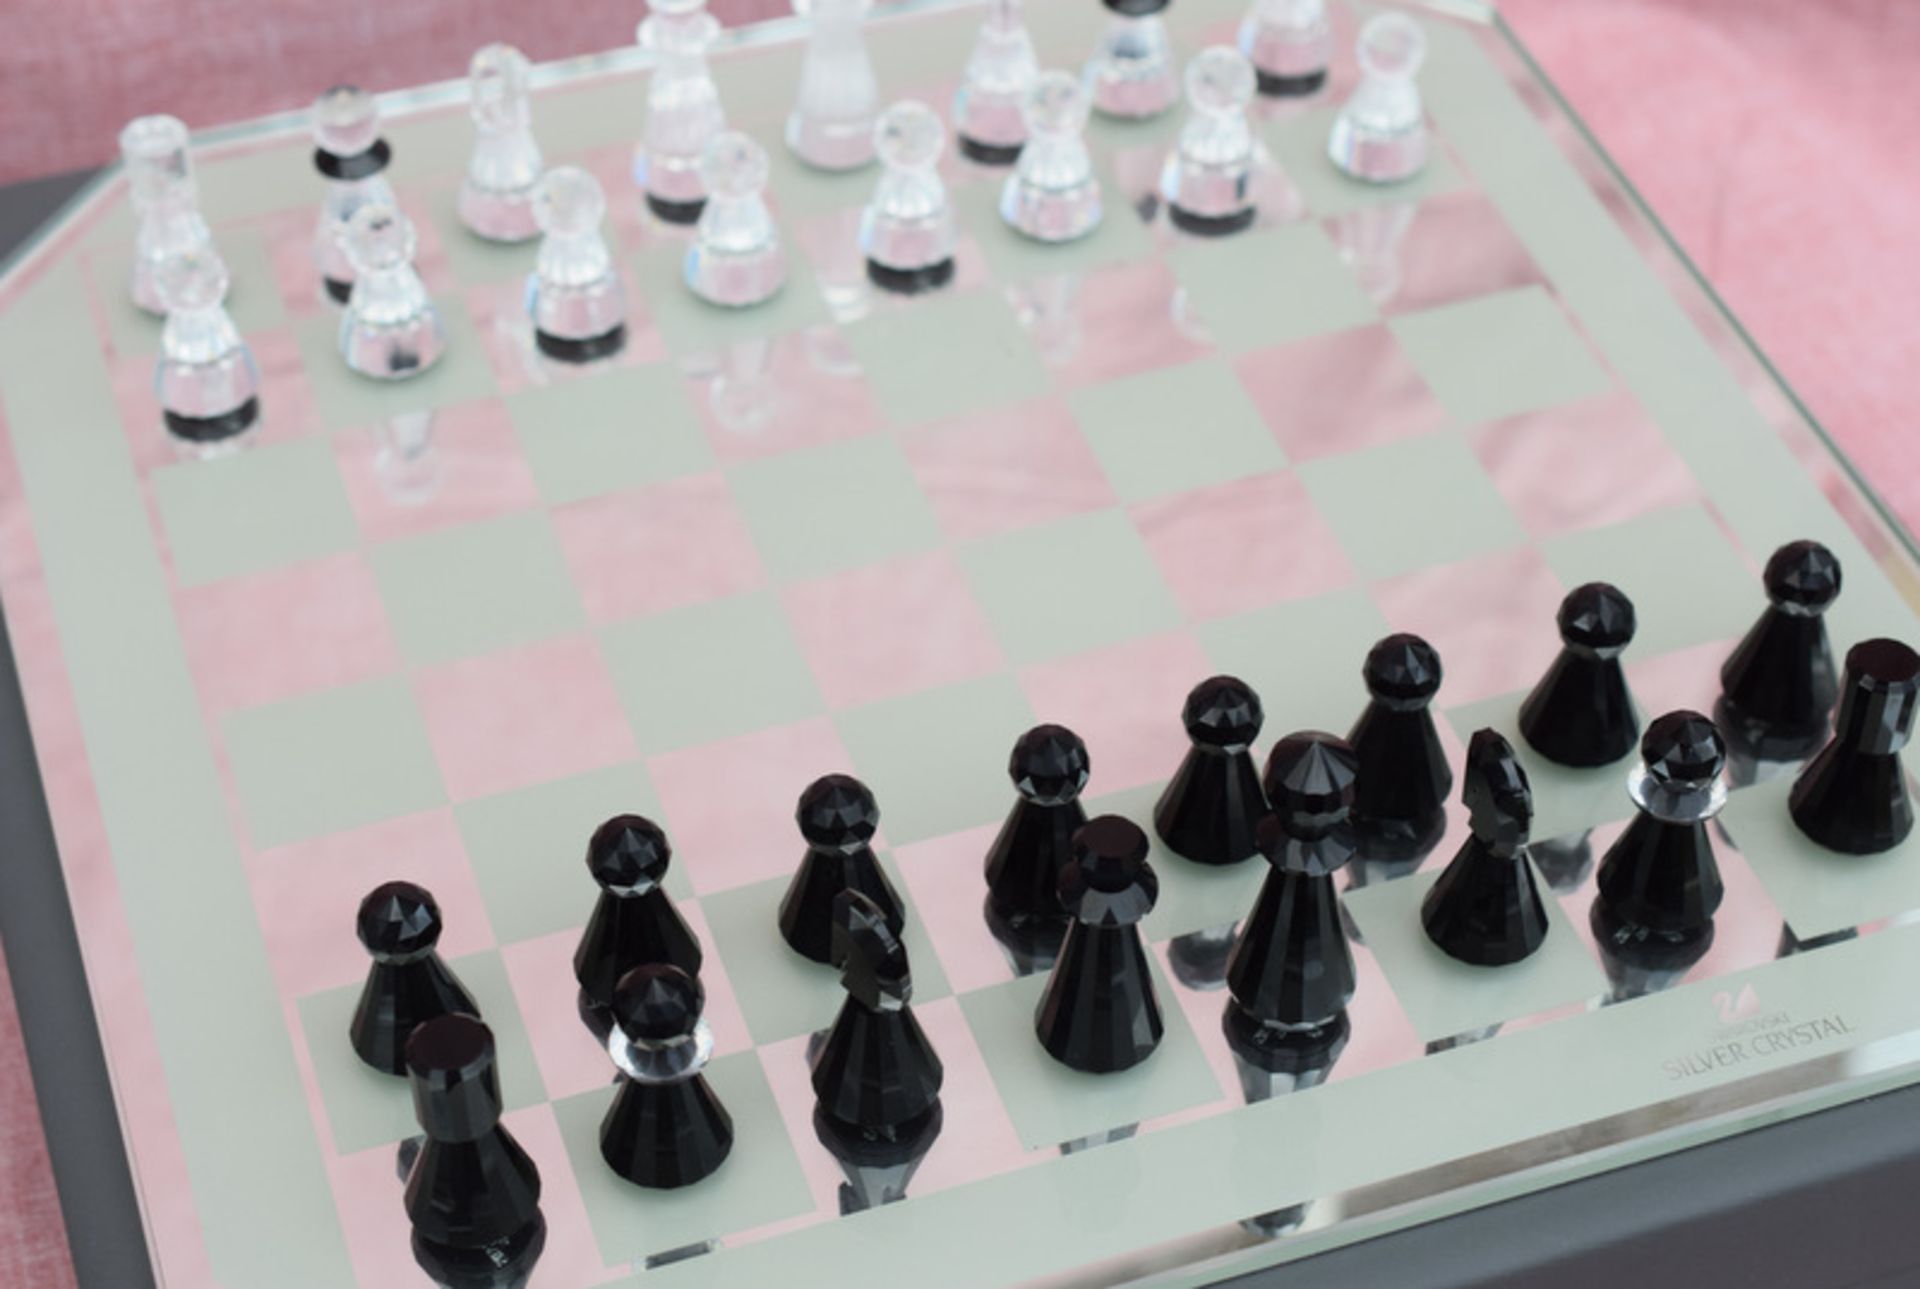 Swarovski Silver Crystal Chess Set Like New In Box - Image 8 of 10